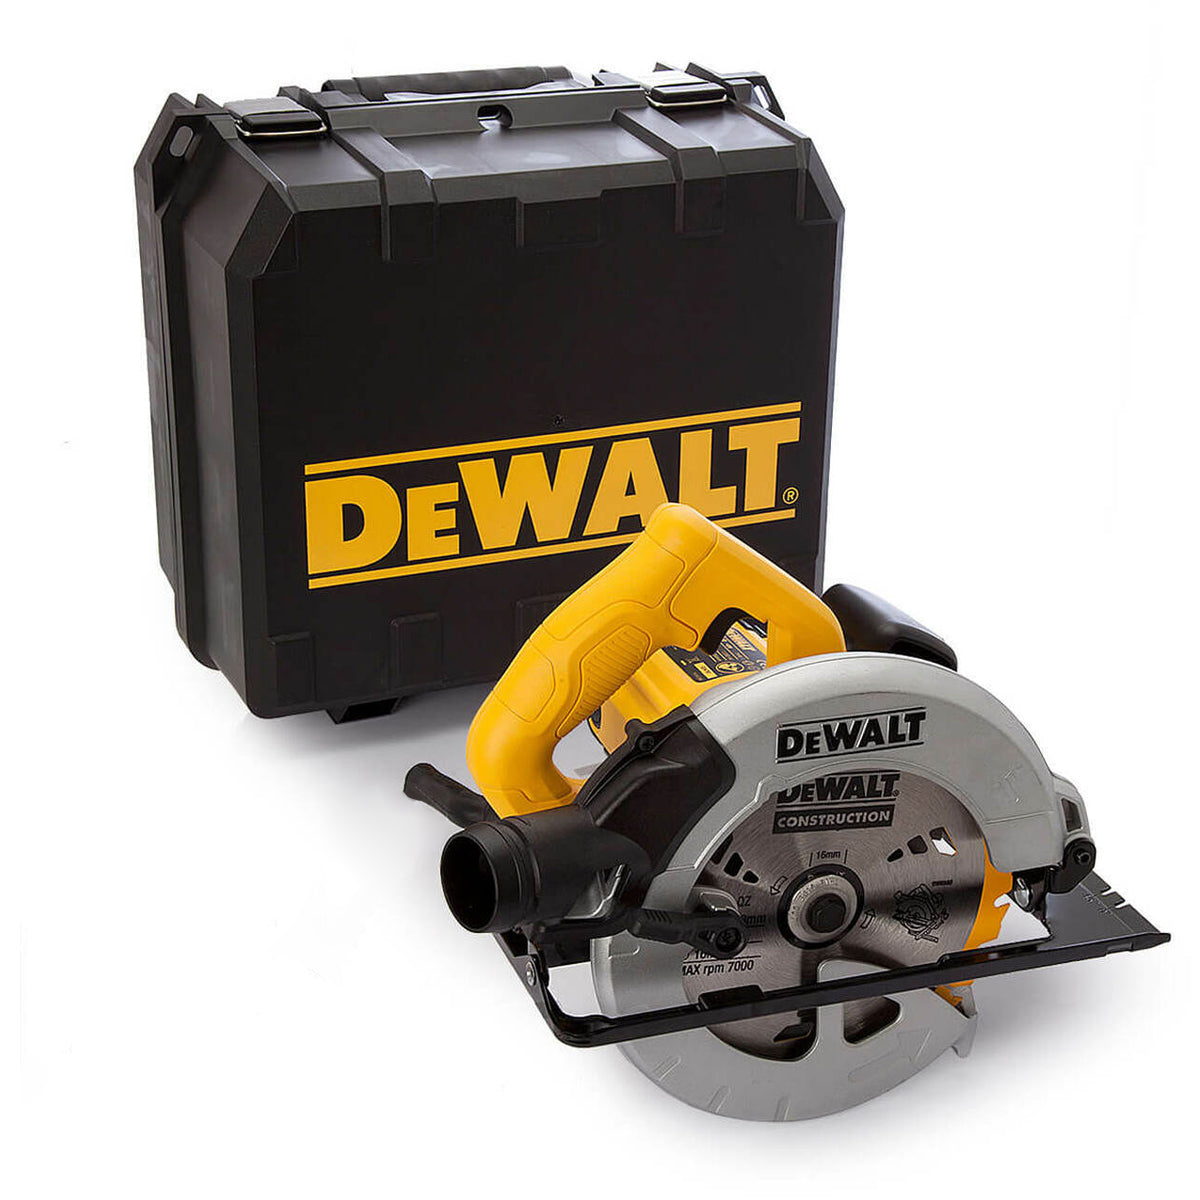 Dewalt DWE560K 184mm Compact Circular Saw In Kitbox 240V Item Condition Seller Refurbished